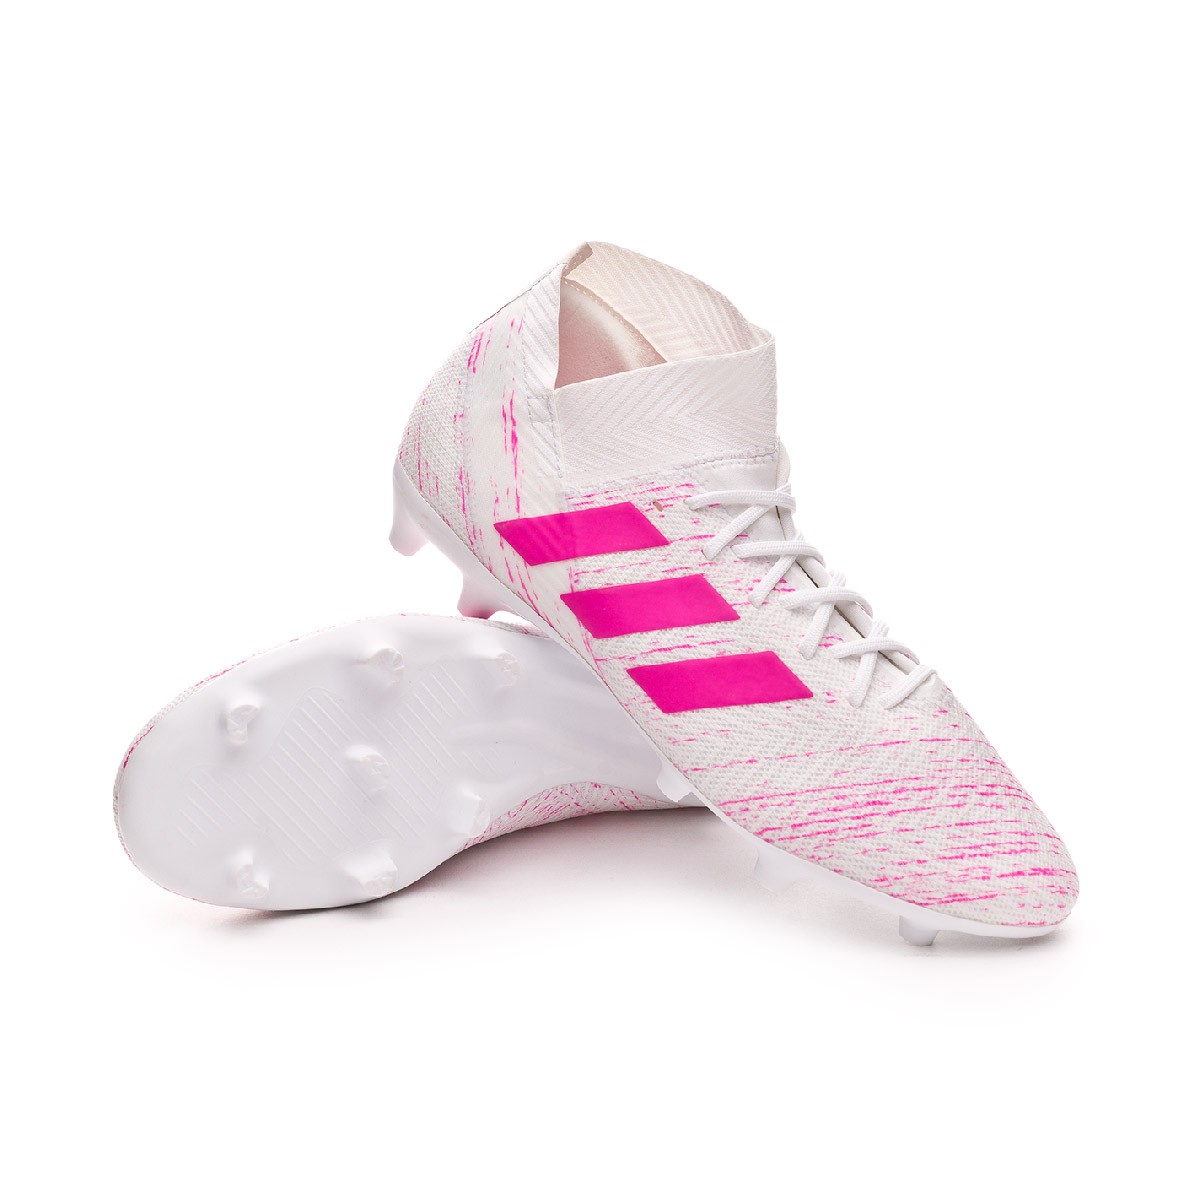 Bota de fútbol adidas Nemeziz 18.3 FG White-Shock pink - Tienda de fútbol  Fútbol Emotion